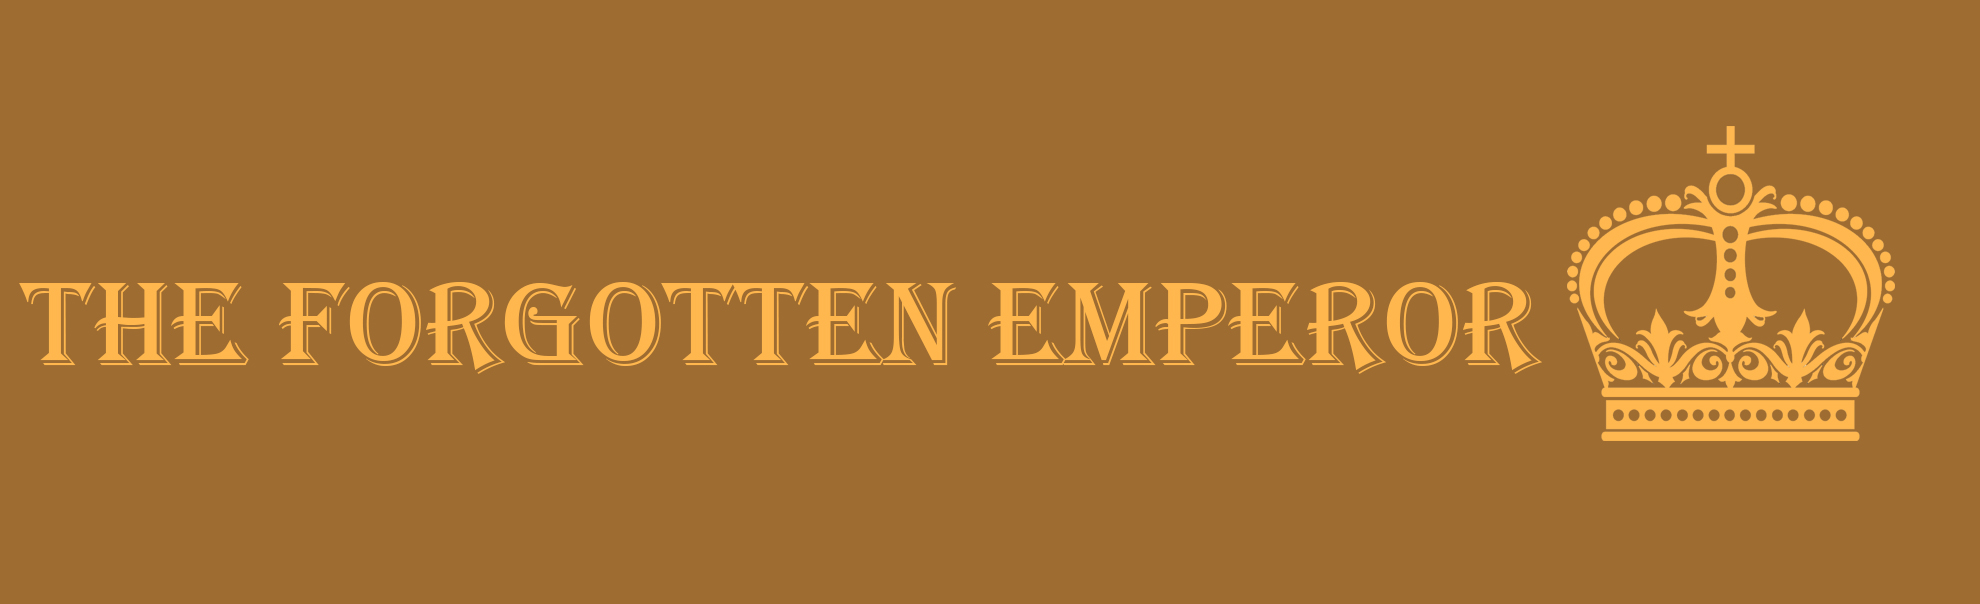 Забытый император